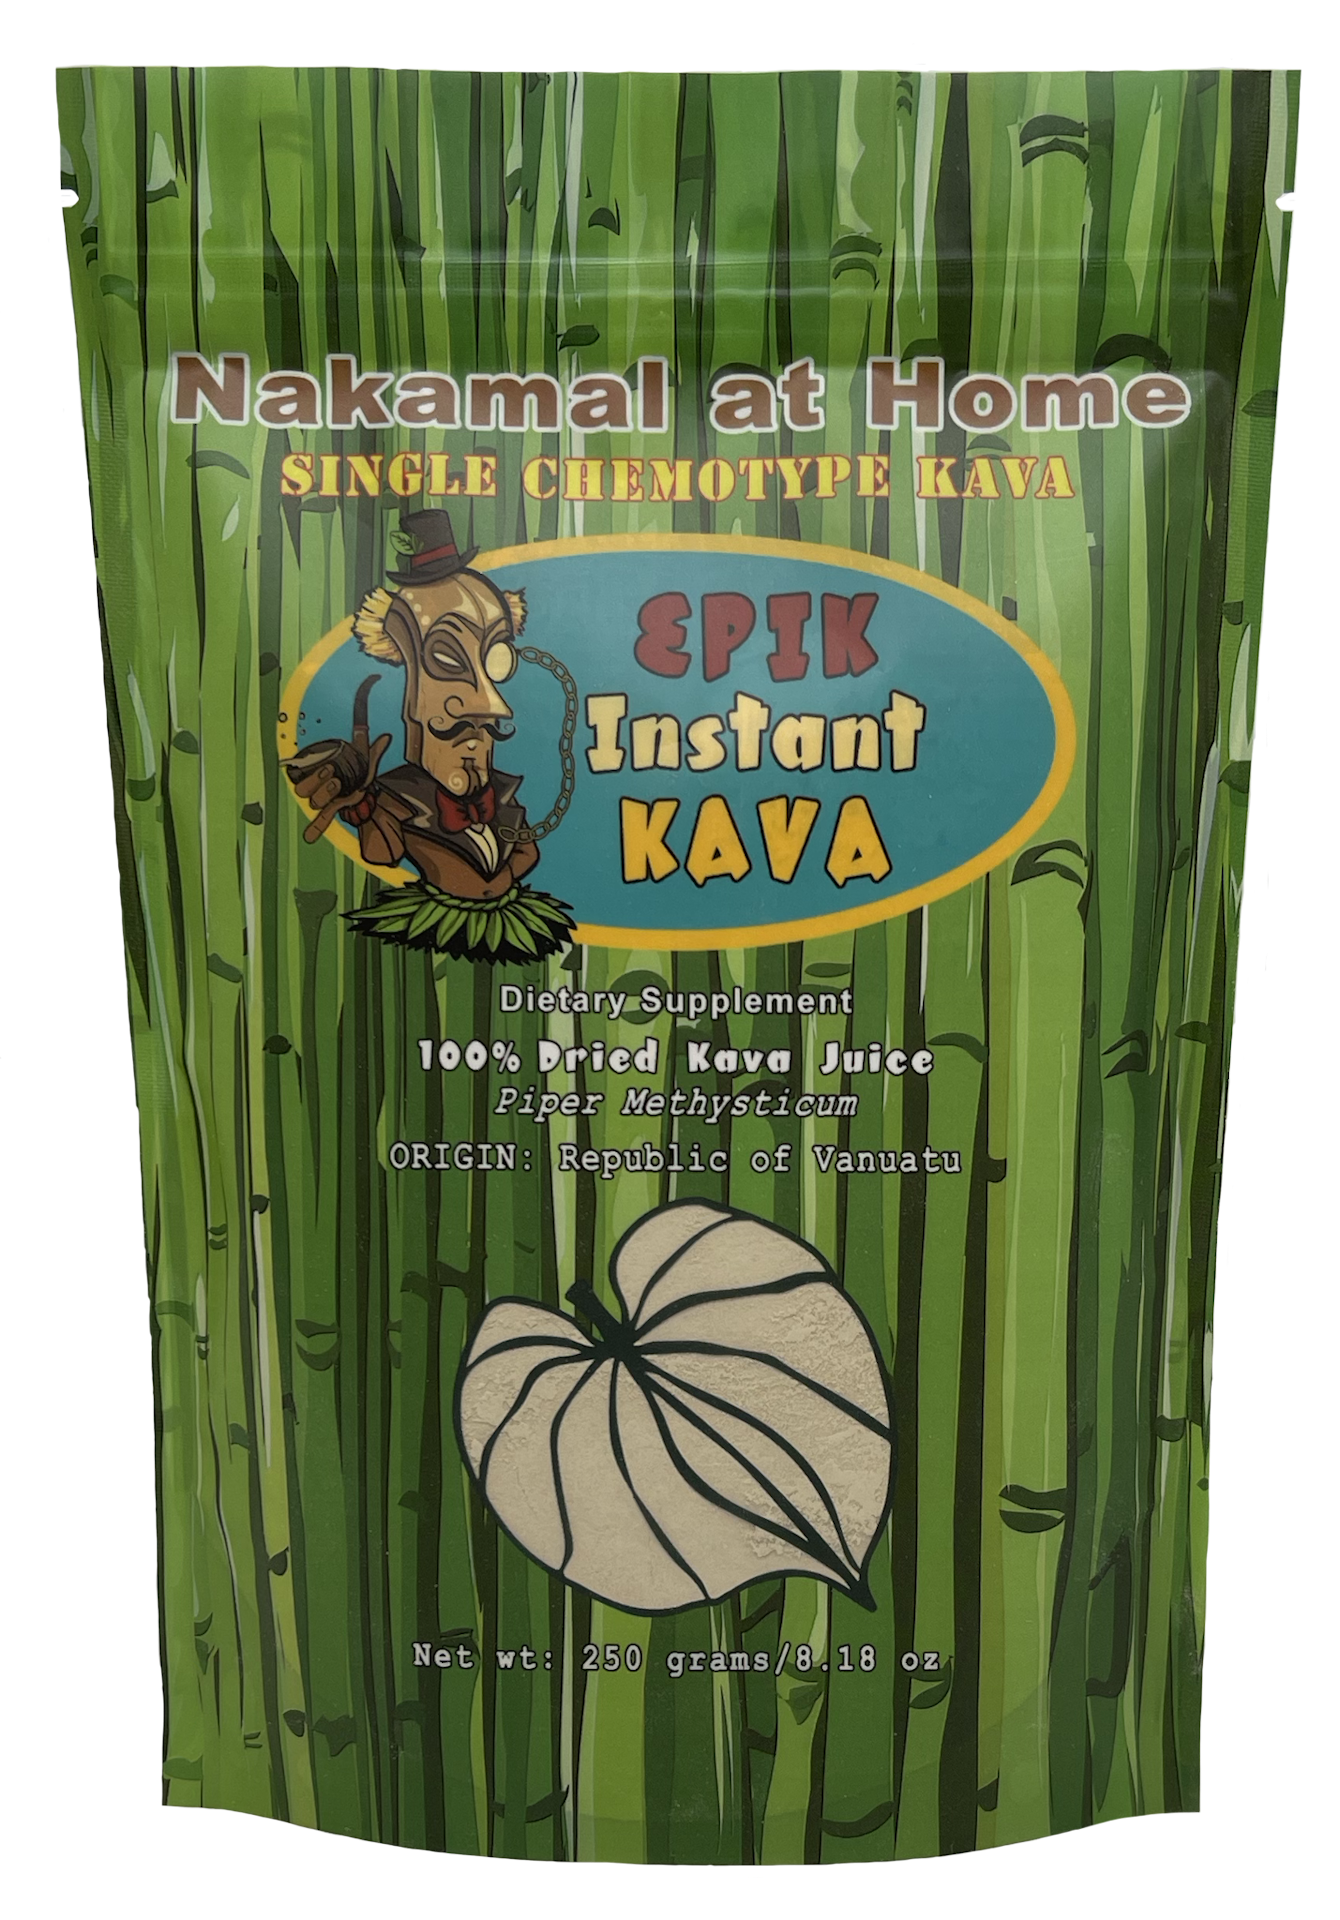 Epik Instant Kava Puariki 250 grams Nakamal At Home